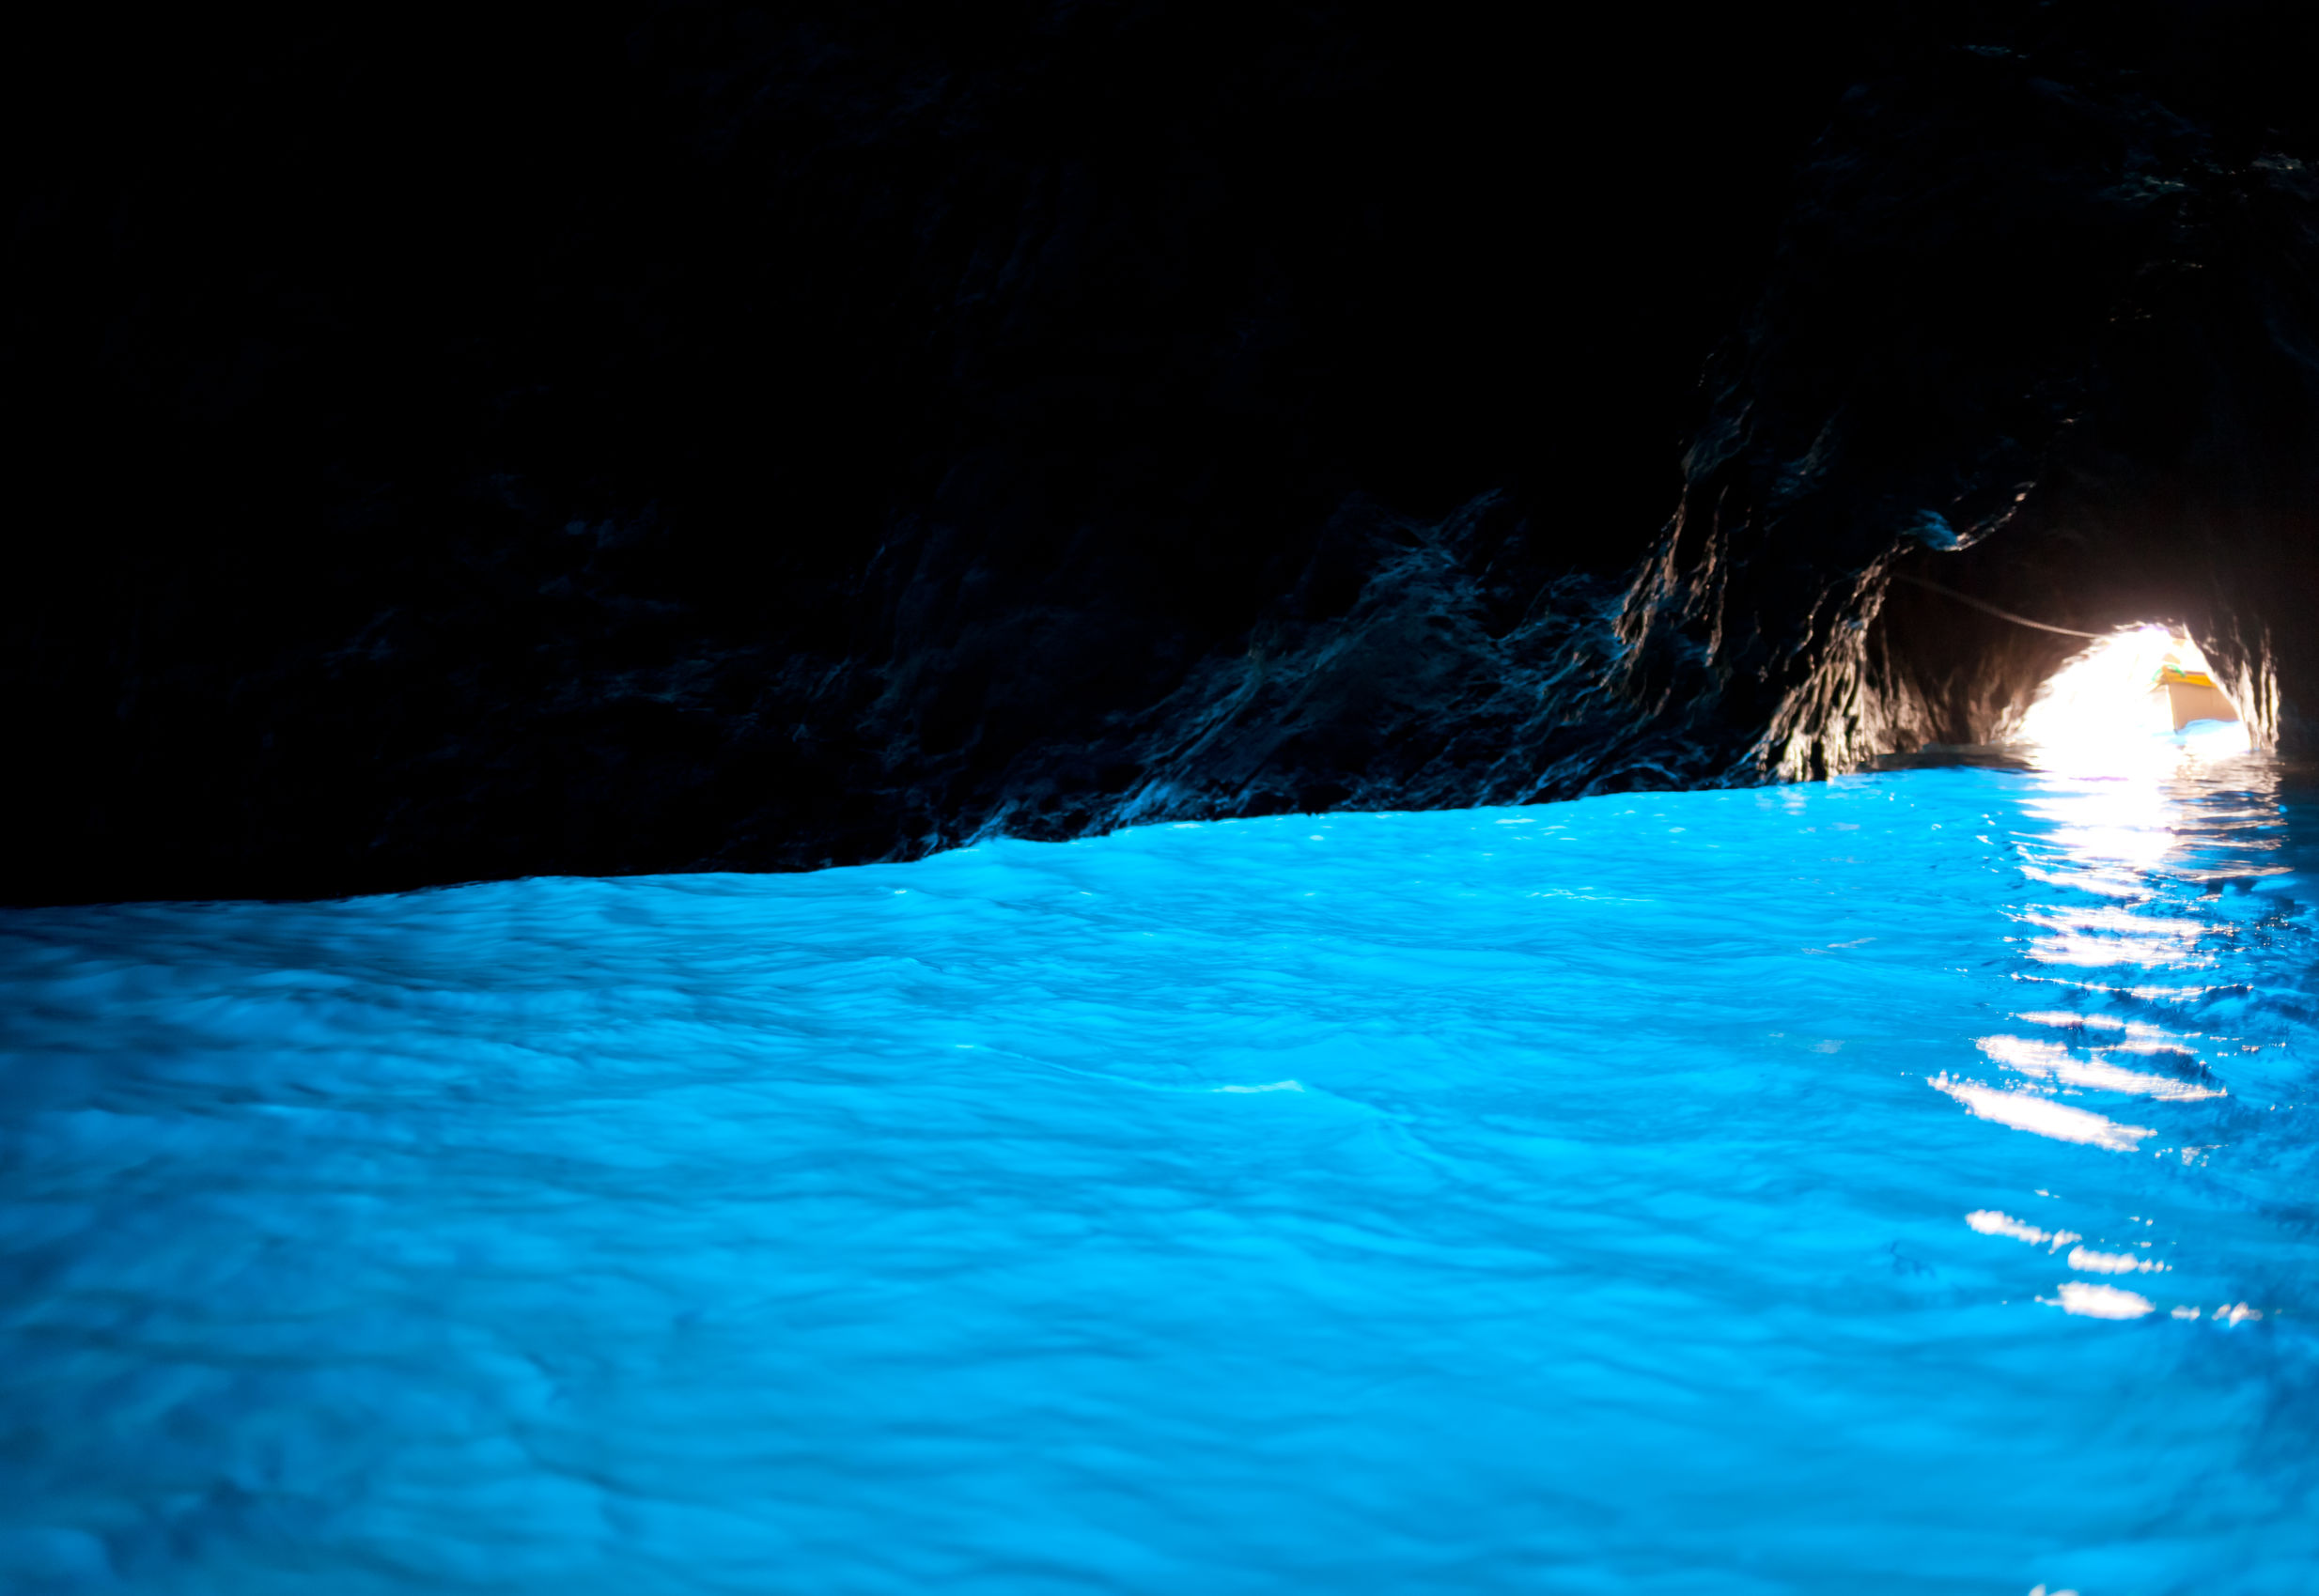  the blue grotto, in italian grotta azzurra